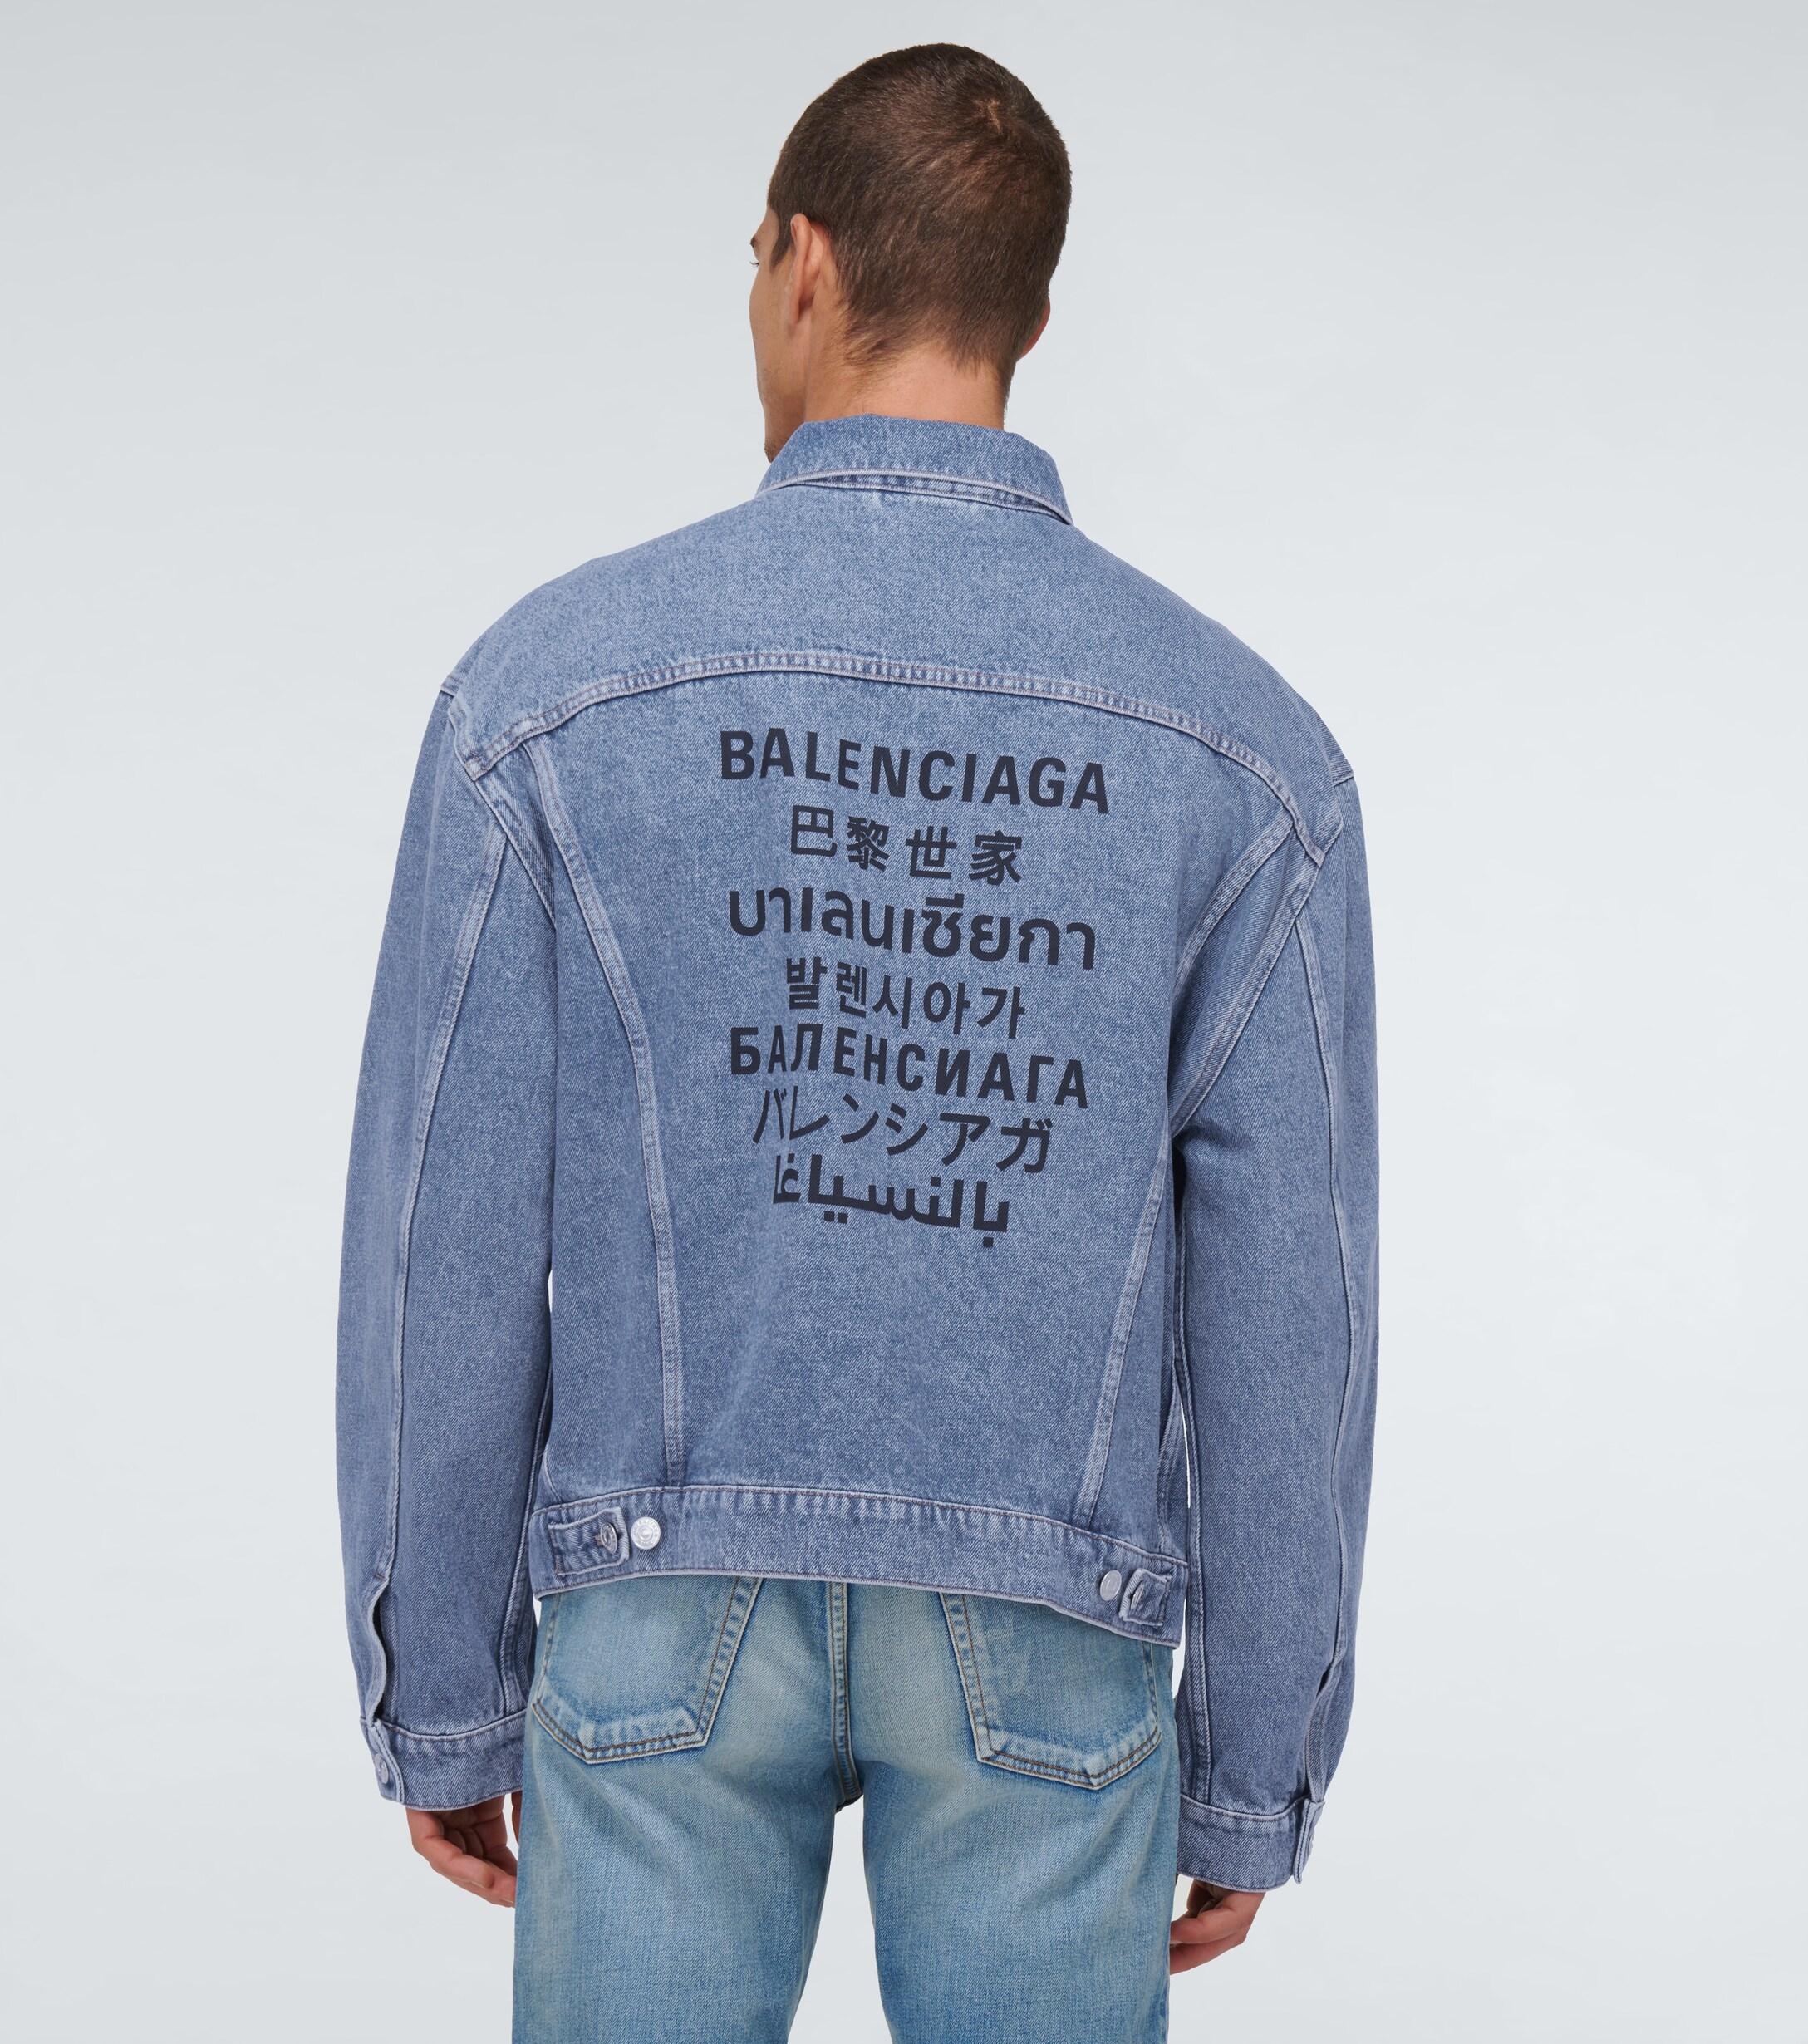 Balenciaga Large-fit Denim Jacket in Blue for Men - Lyst